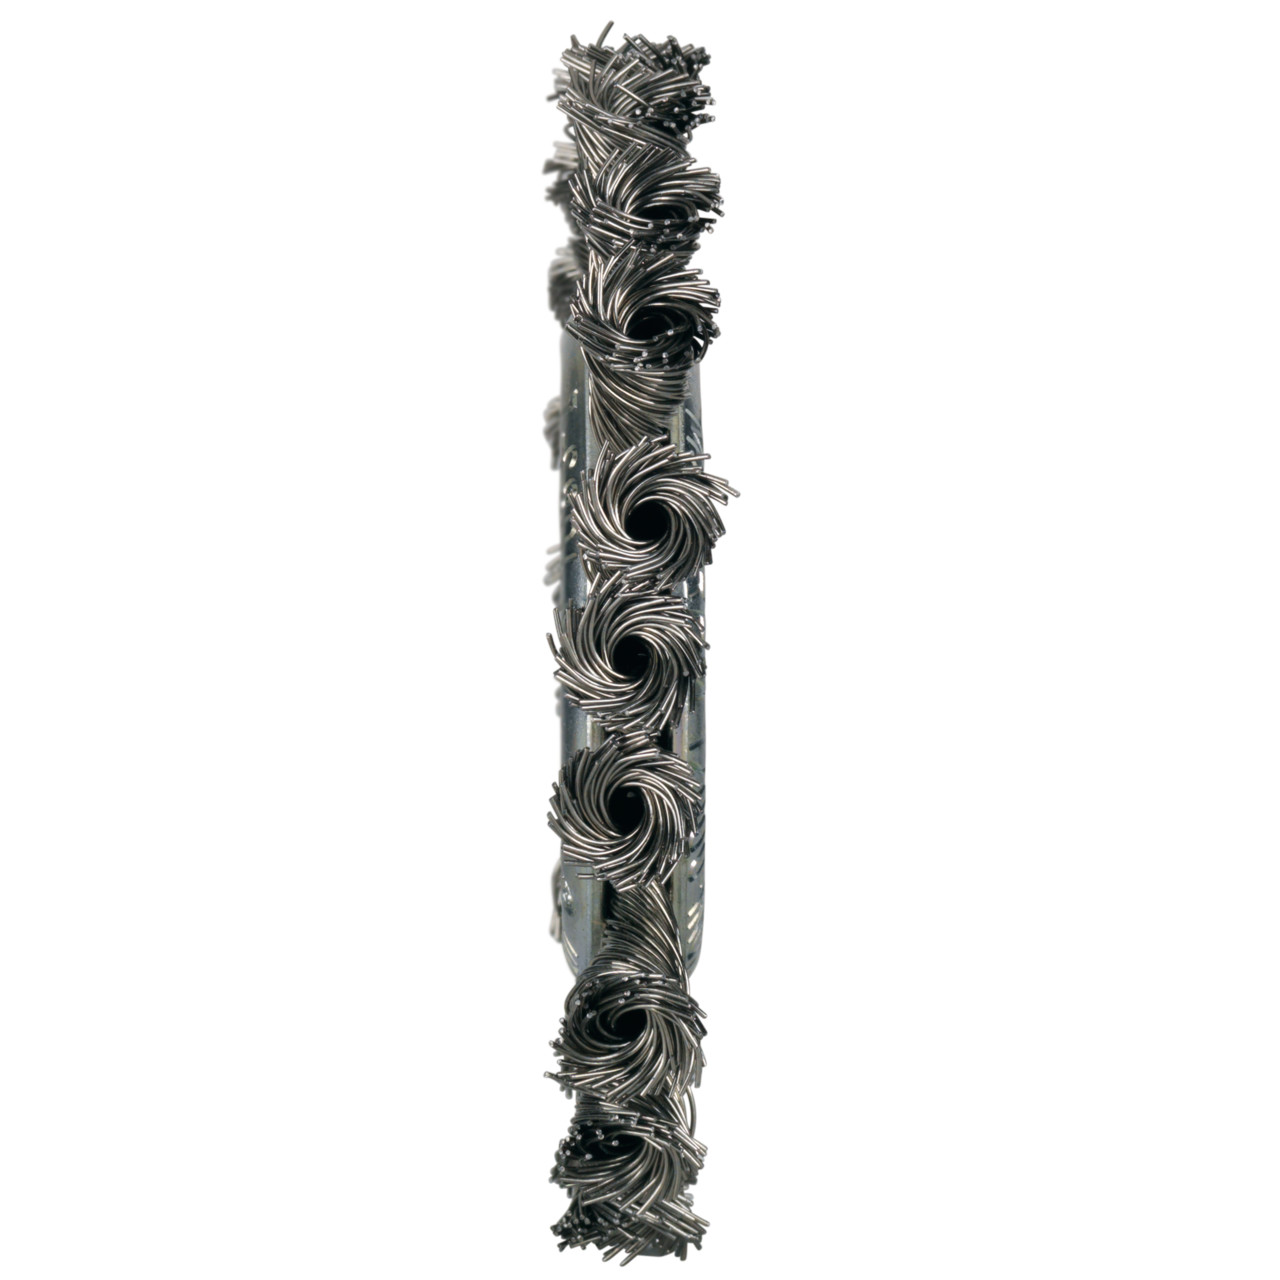 Spazzole rotonde Tyrolit DxLxGE 178x15x44xM14 Per acciaio inox, forma: 1RDZ - (spazzola rotonda), Art. 16425